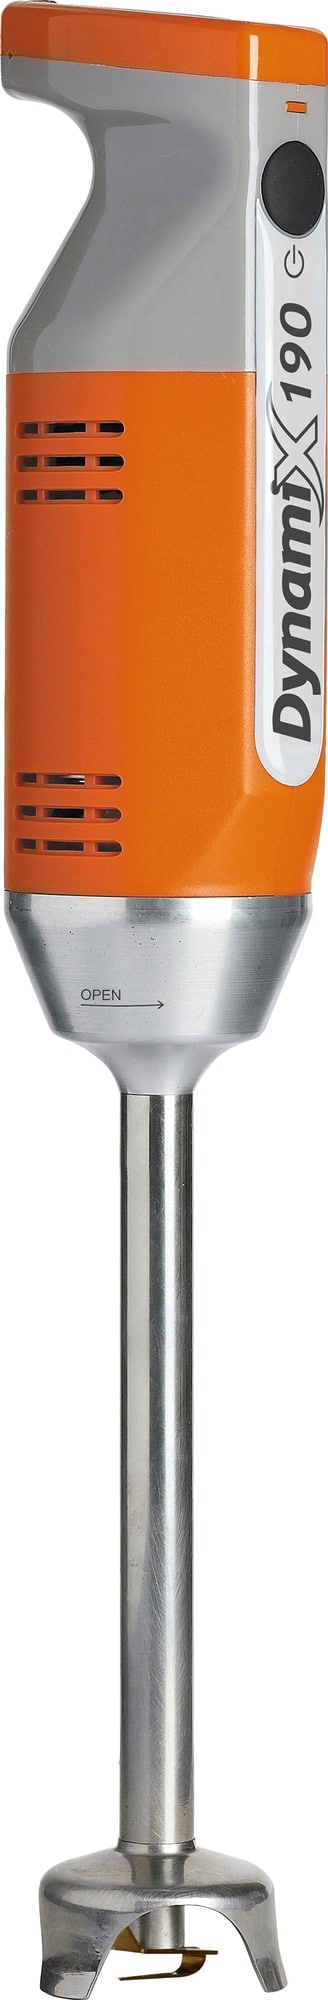 Dynamix stavblender MX090 (orange)